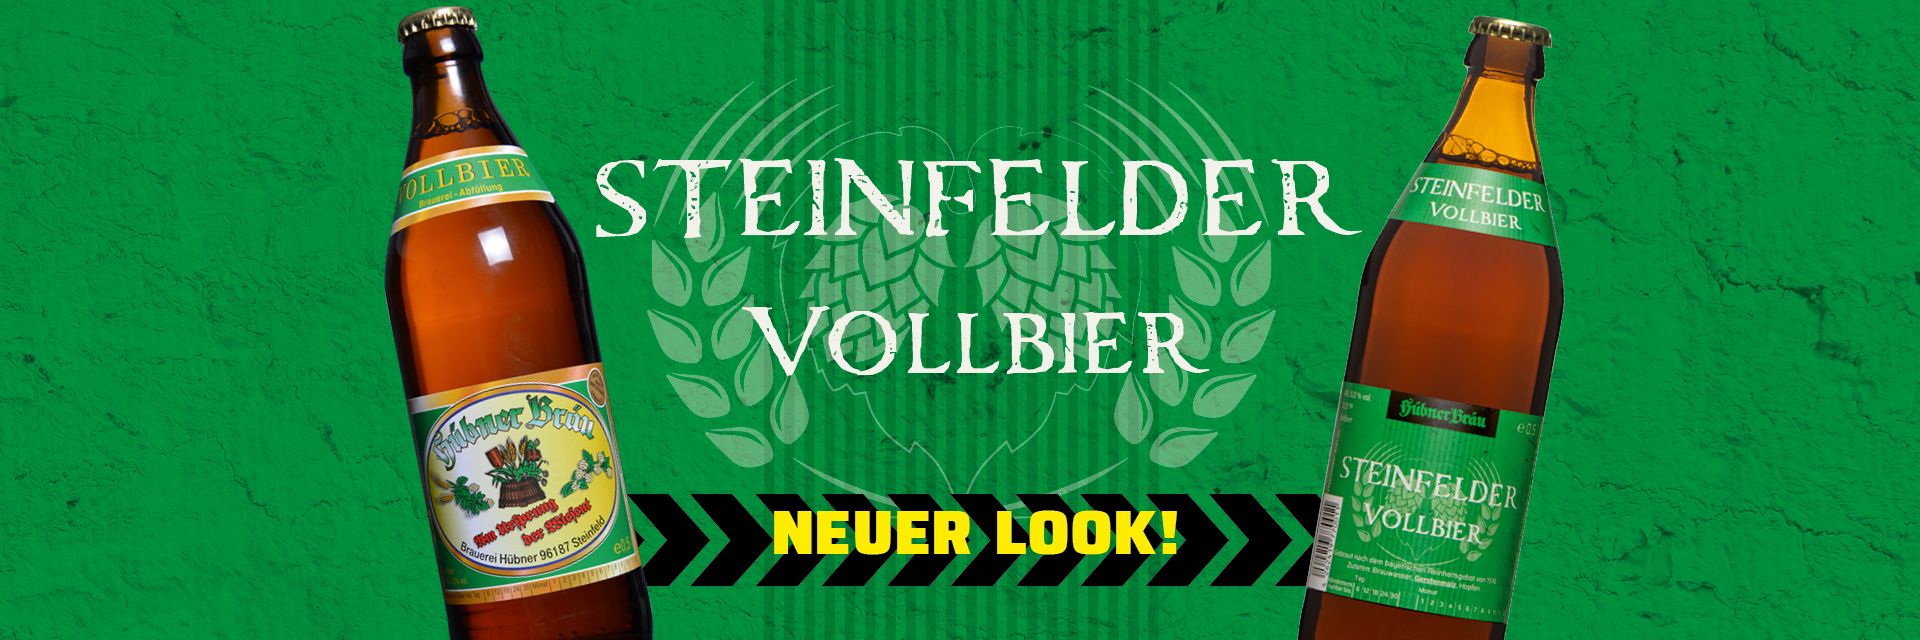 Steinfelder Vollbier Neuer Look